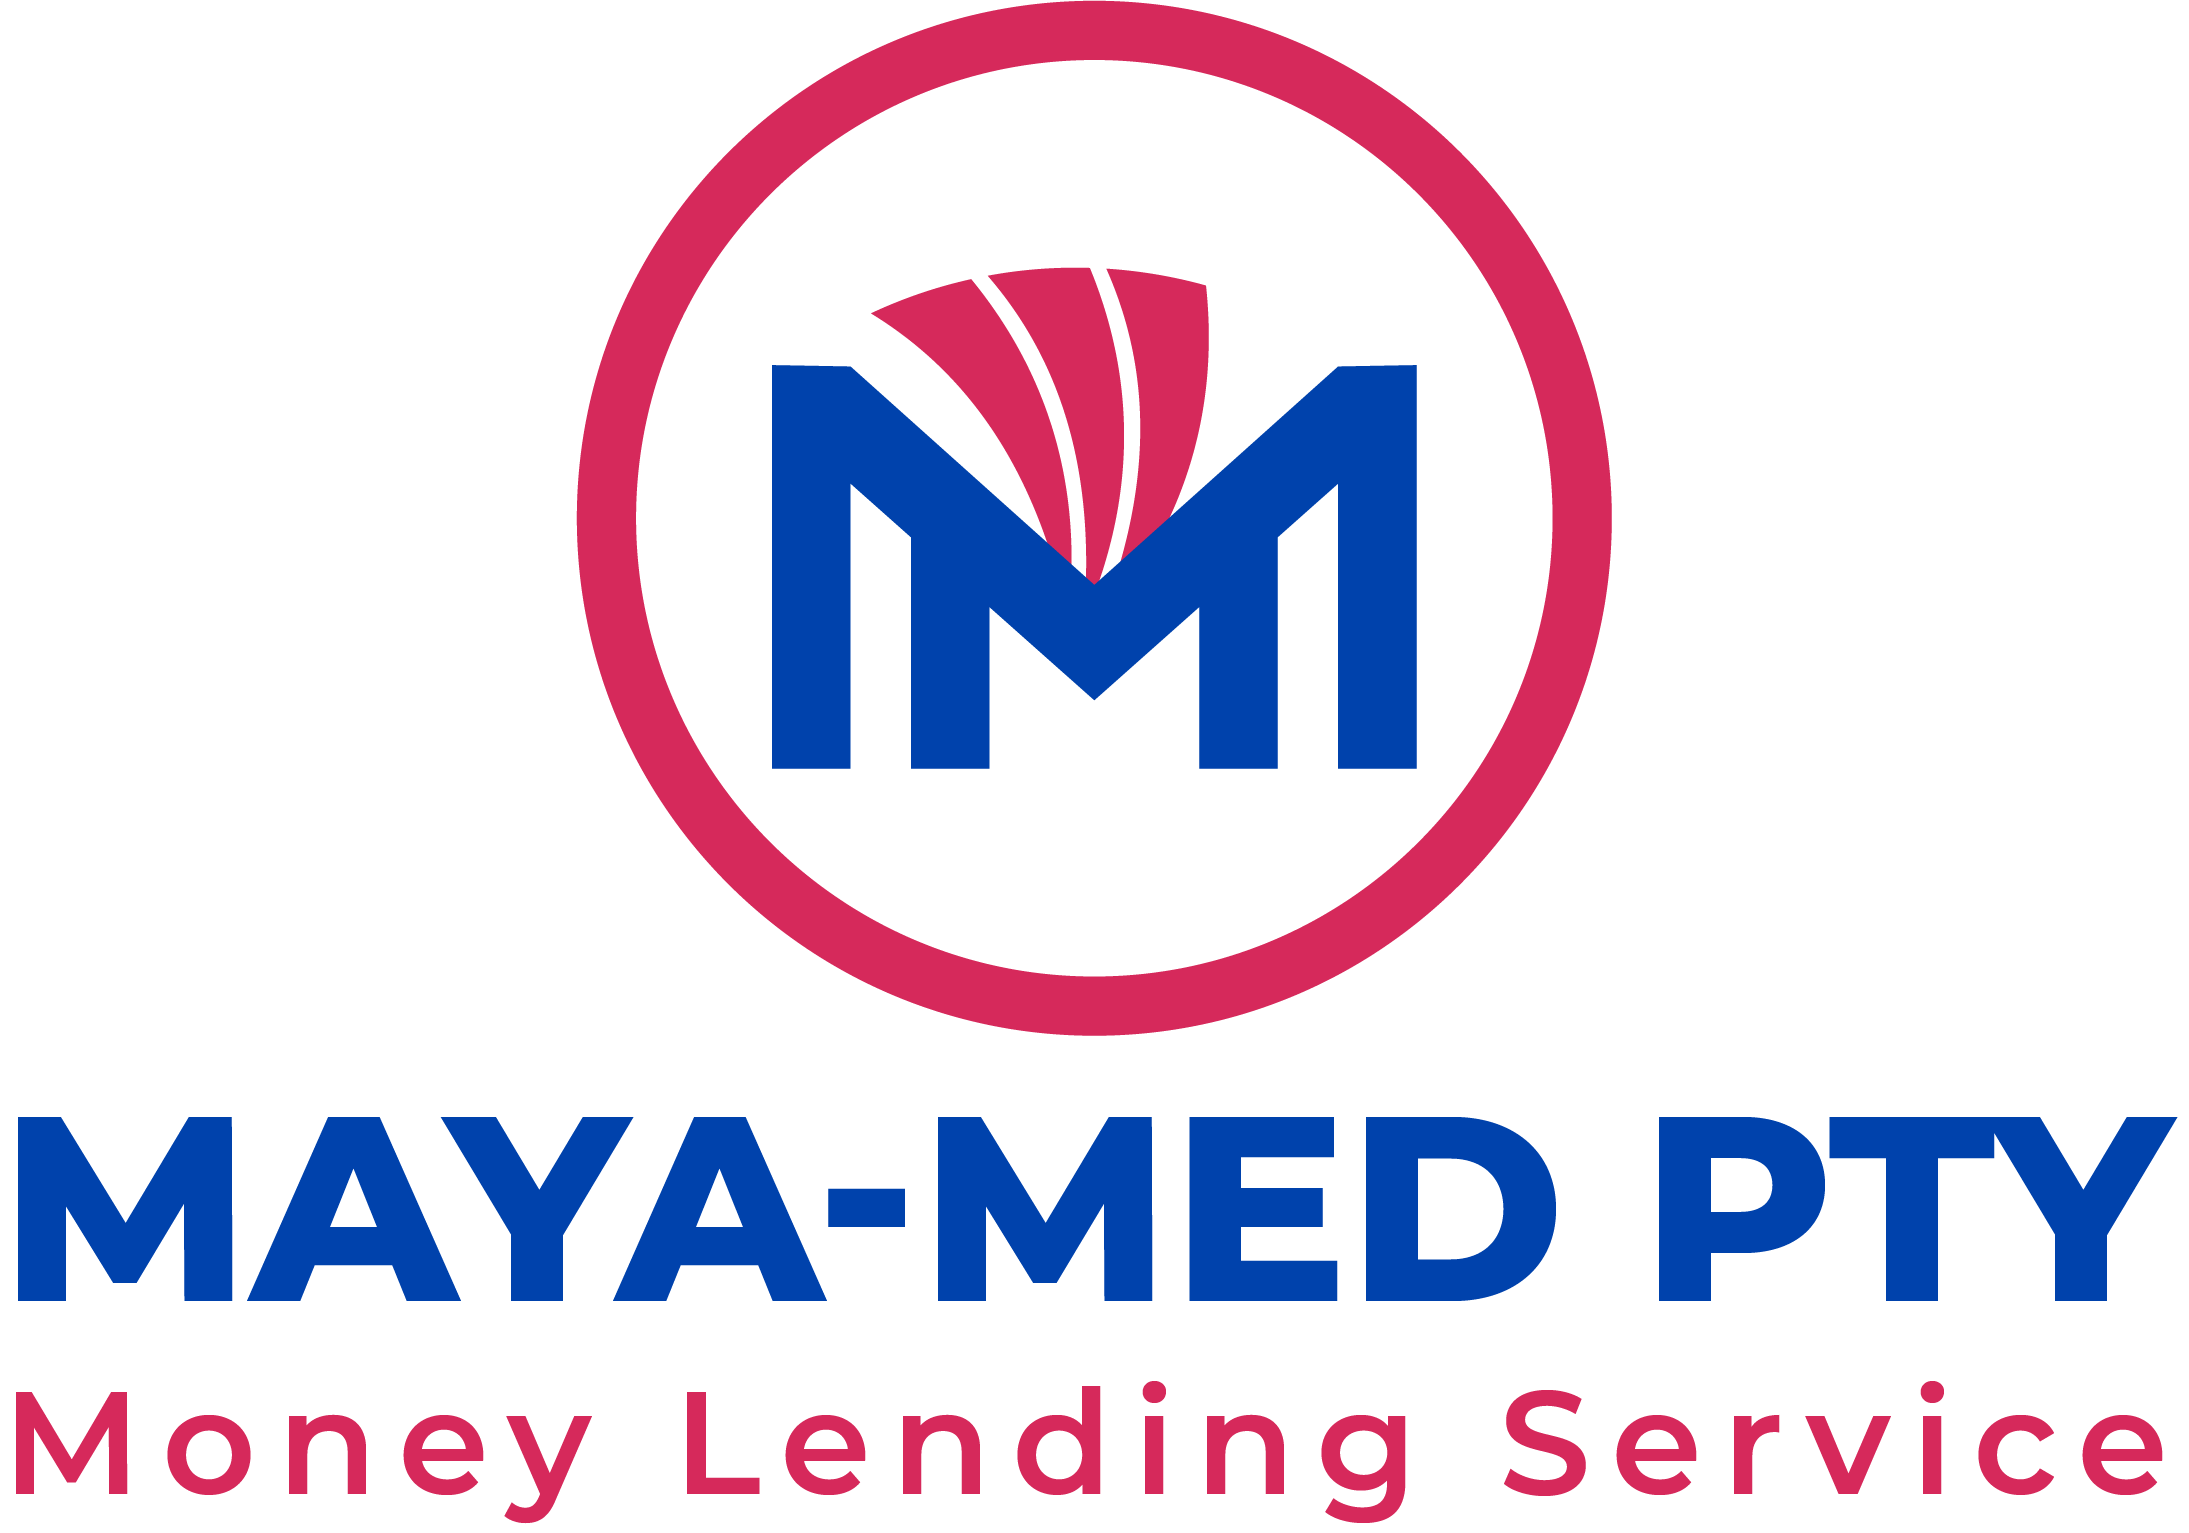 Maya-Med Pty Money Lending Service